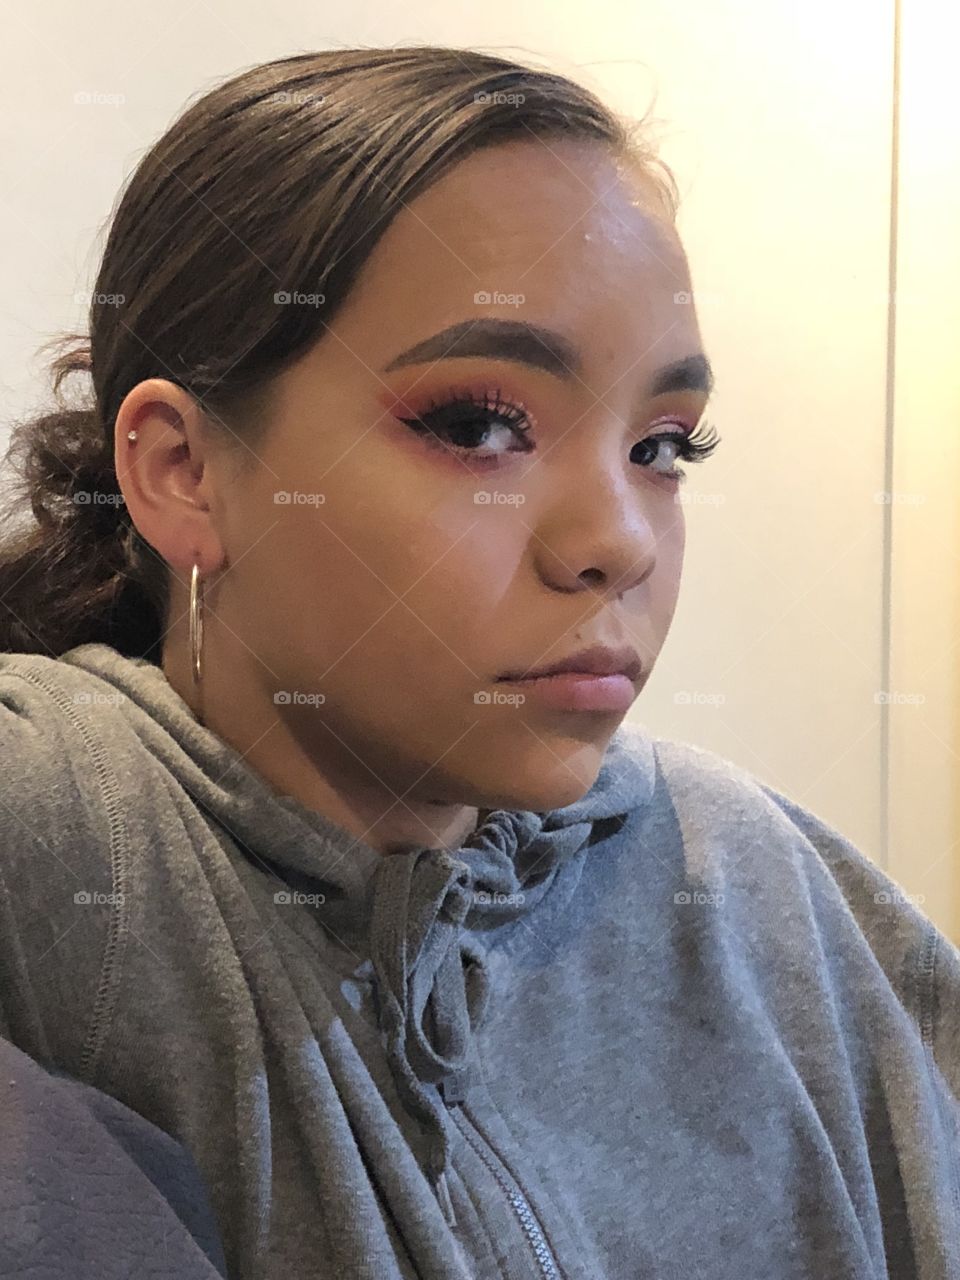 Teenagers and makeup 